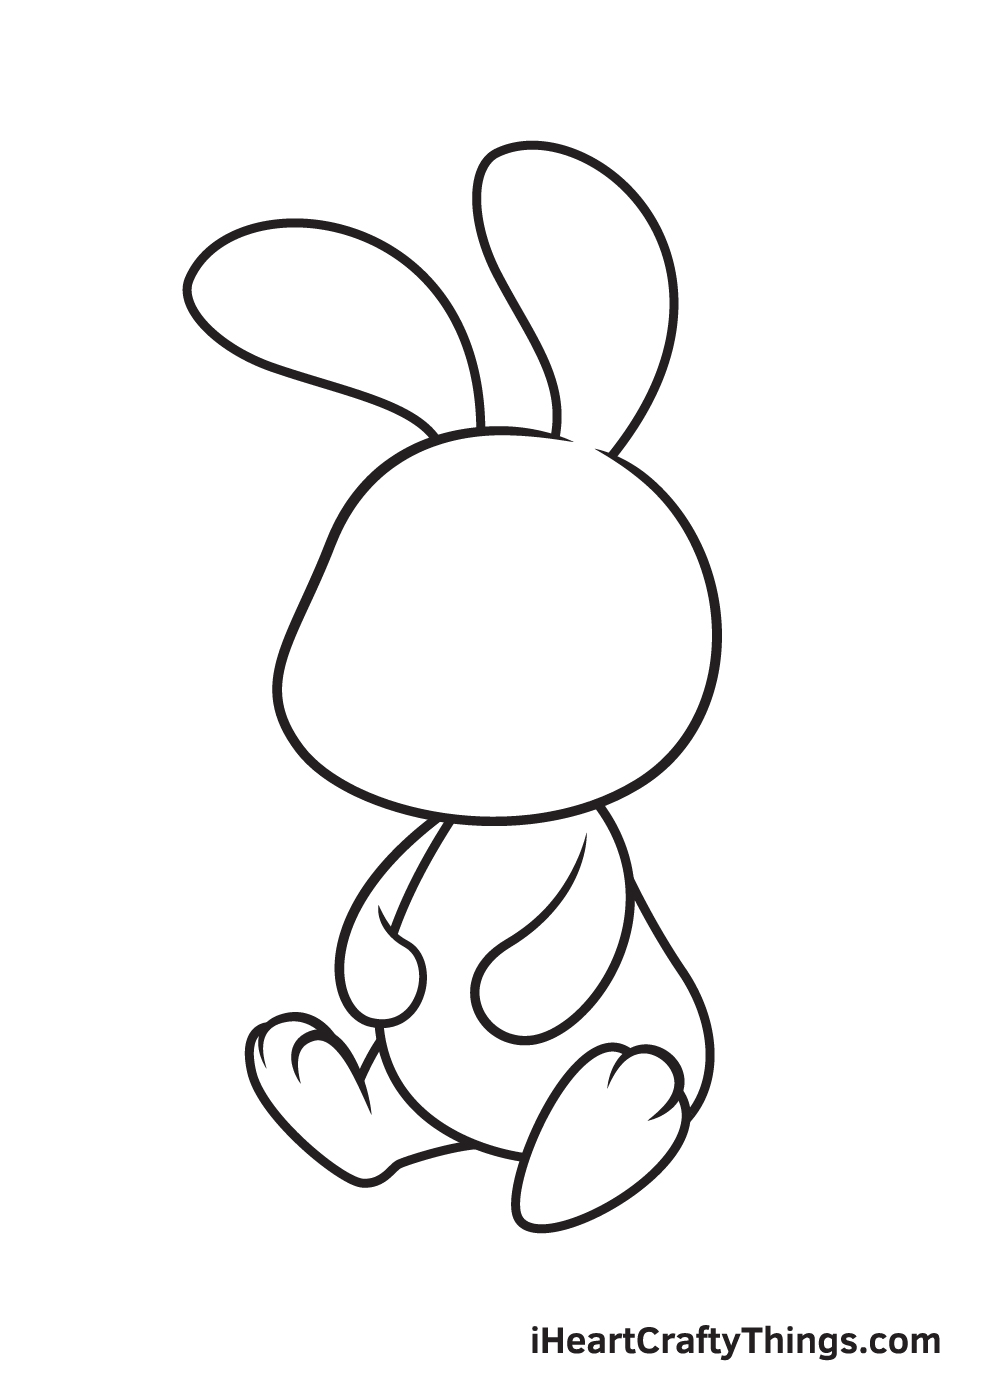 Bunny Drawing – Step 4